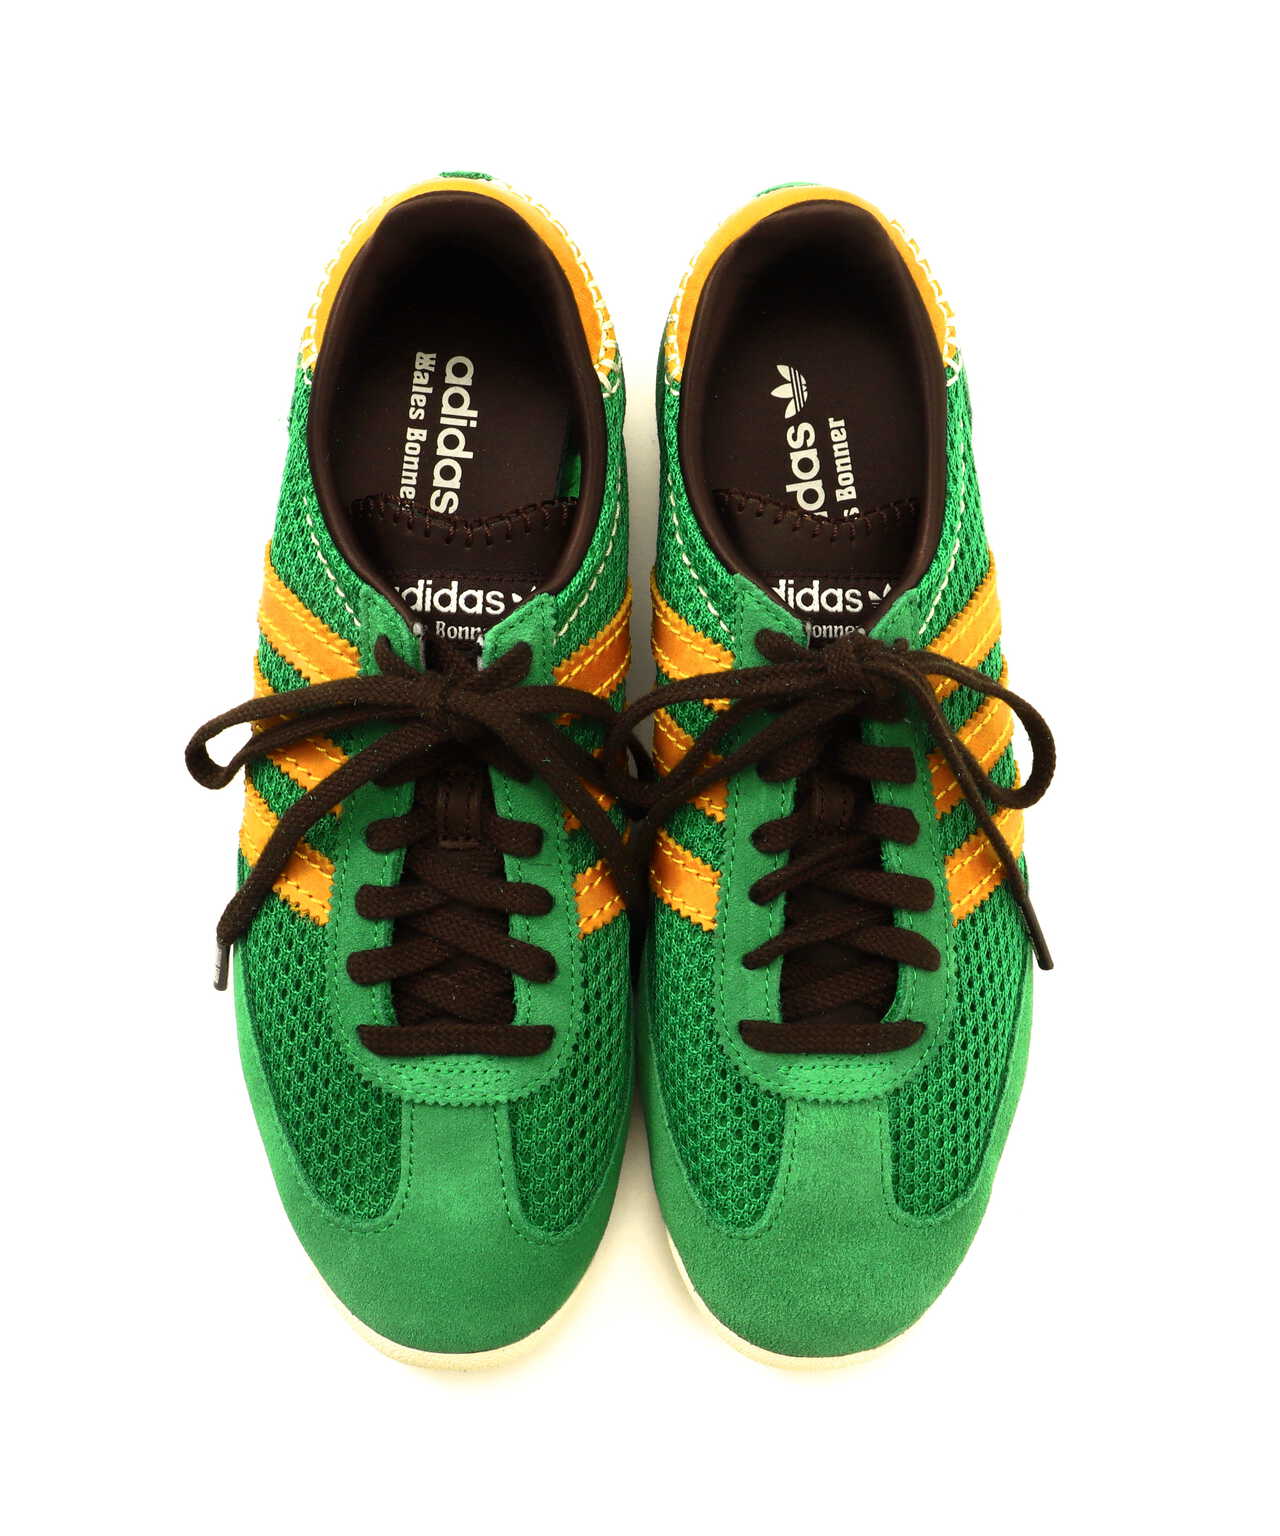 Wales Bonner X Adidas SL72 Knit Green